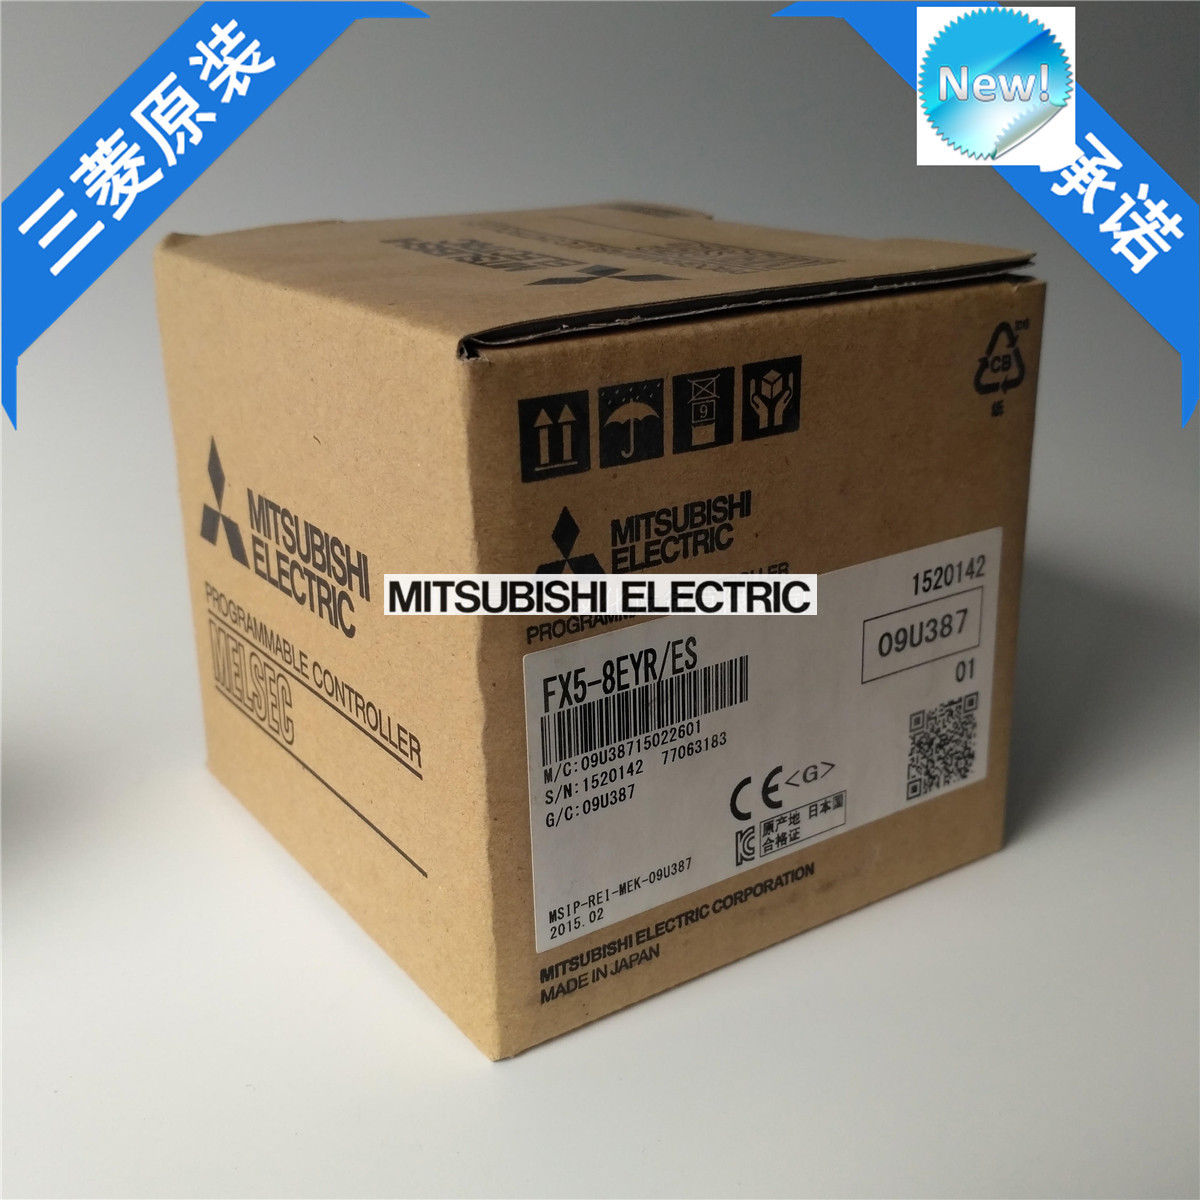 Mitsubishi FX5 series FX5-8EYR/ES Digital outputs local unit module FX58EYRES